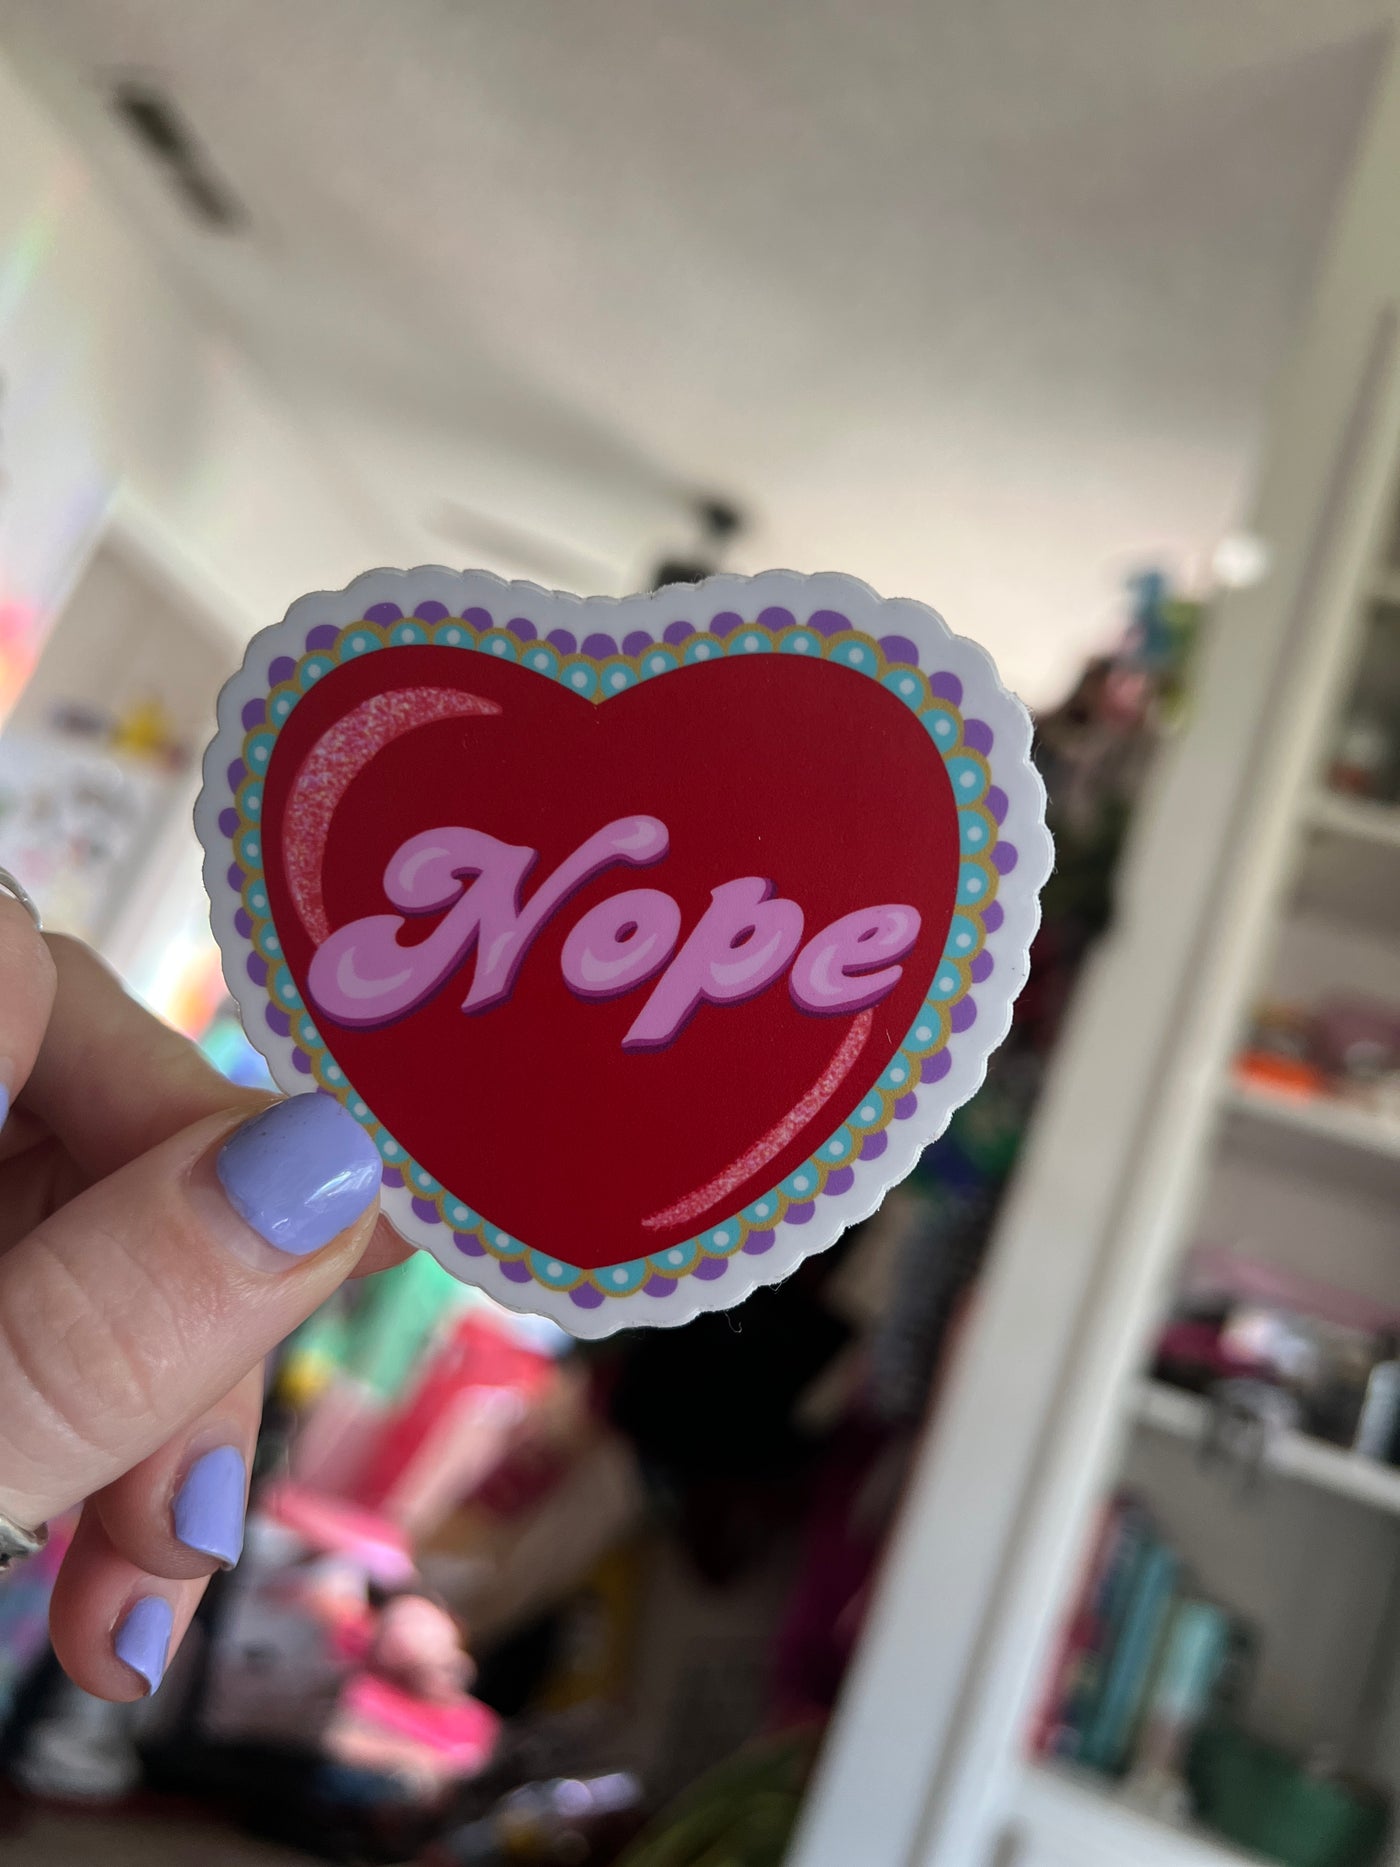 NOPE Heart Sticker